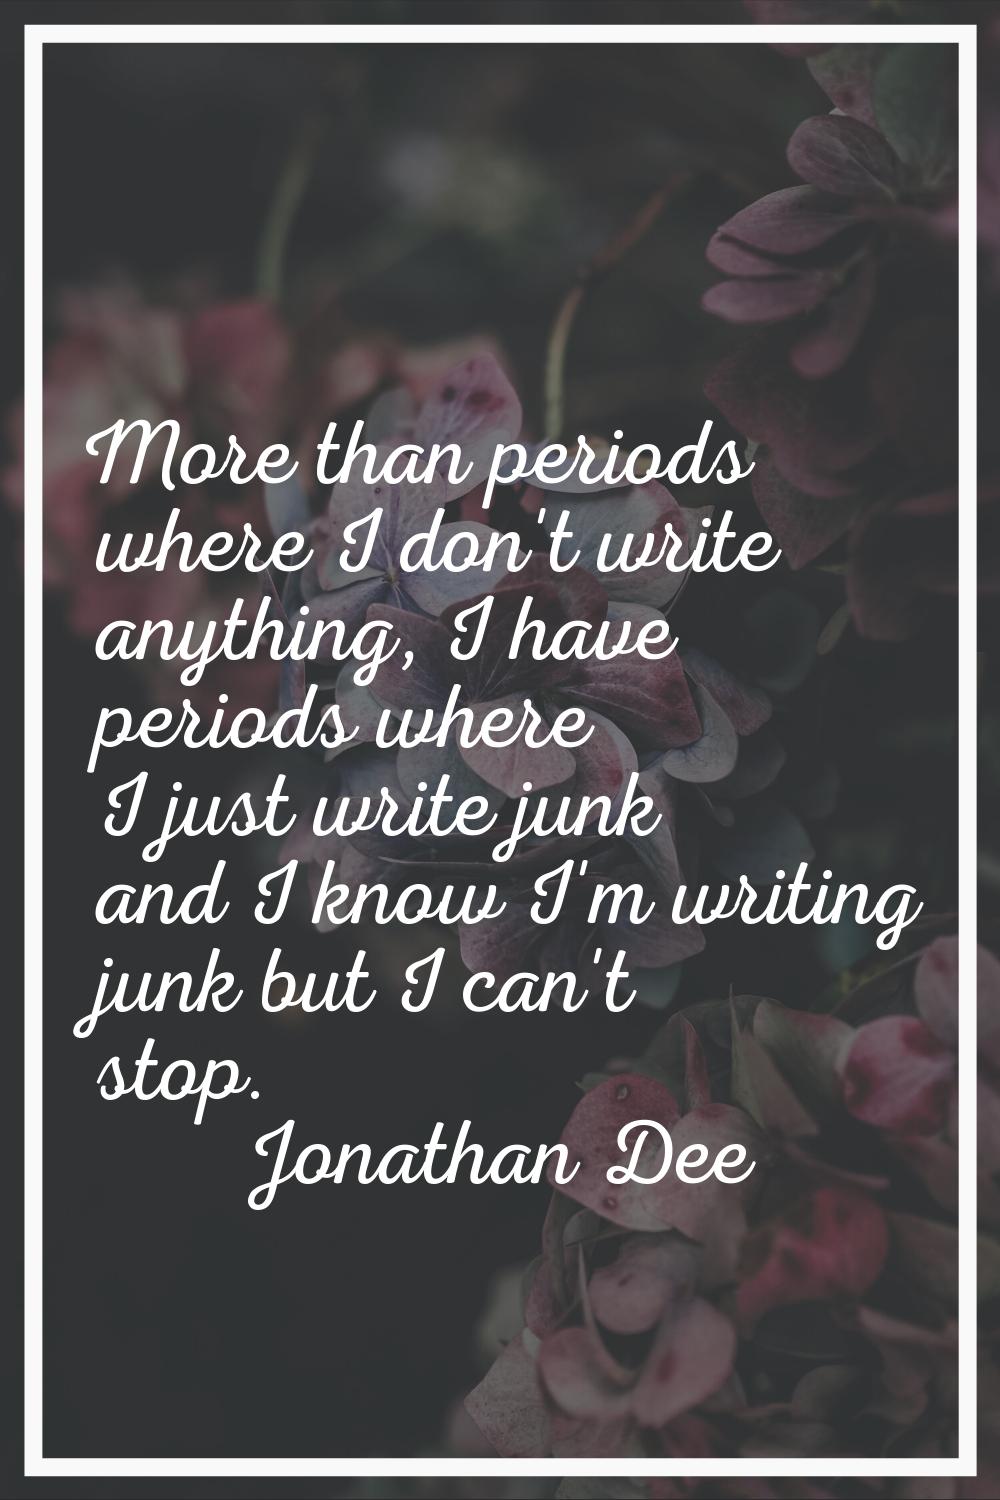 More than periods where I don't write anything, I have periods where I just write junk and I know I